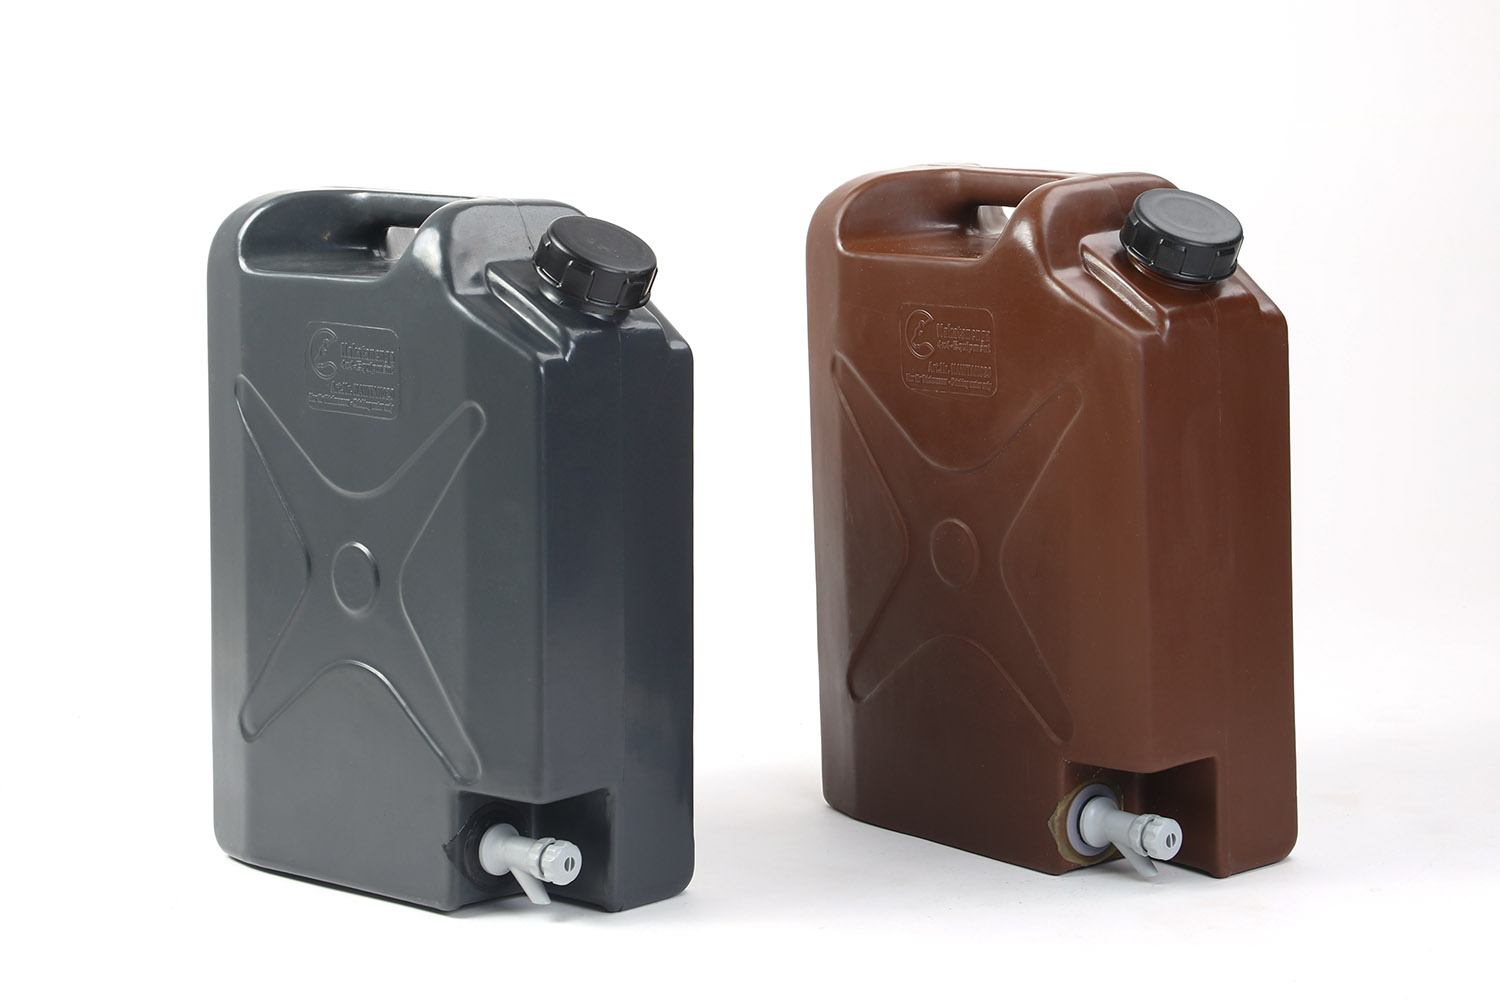 3x Wasserkanister ECO 20 Liter mit Rohr 3er Set Kanister Camping Wassertank  NEU